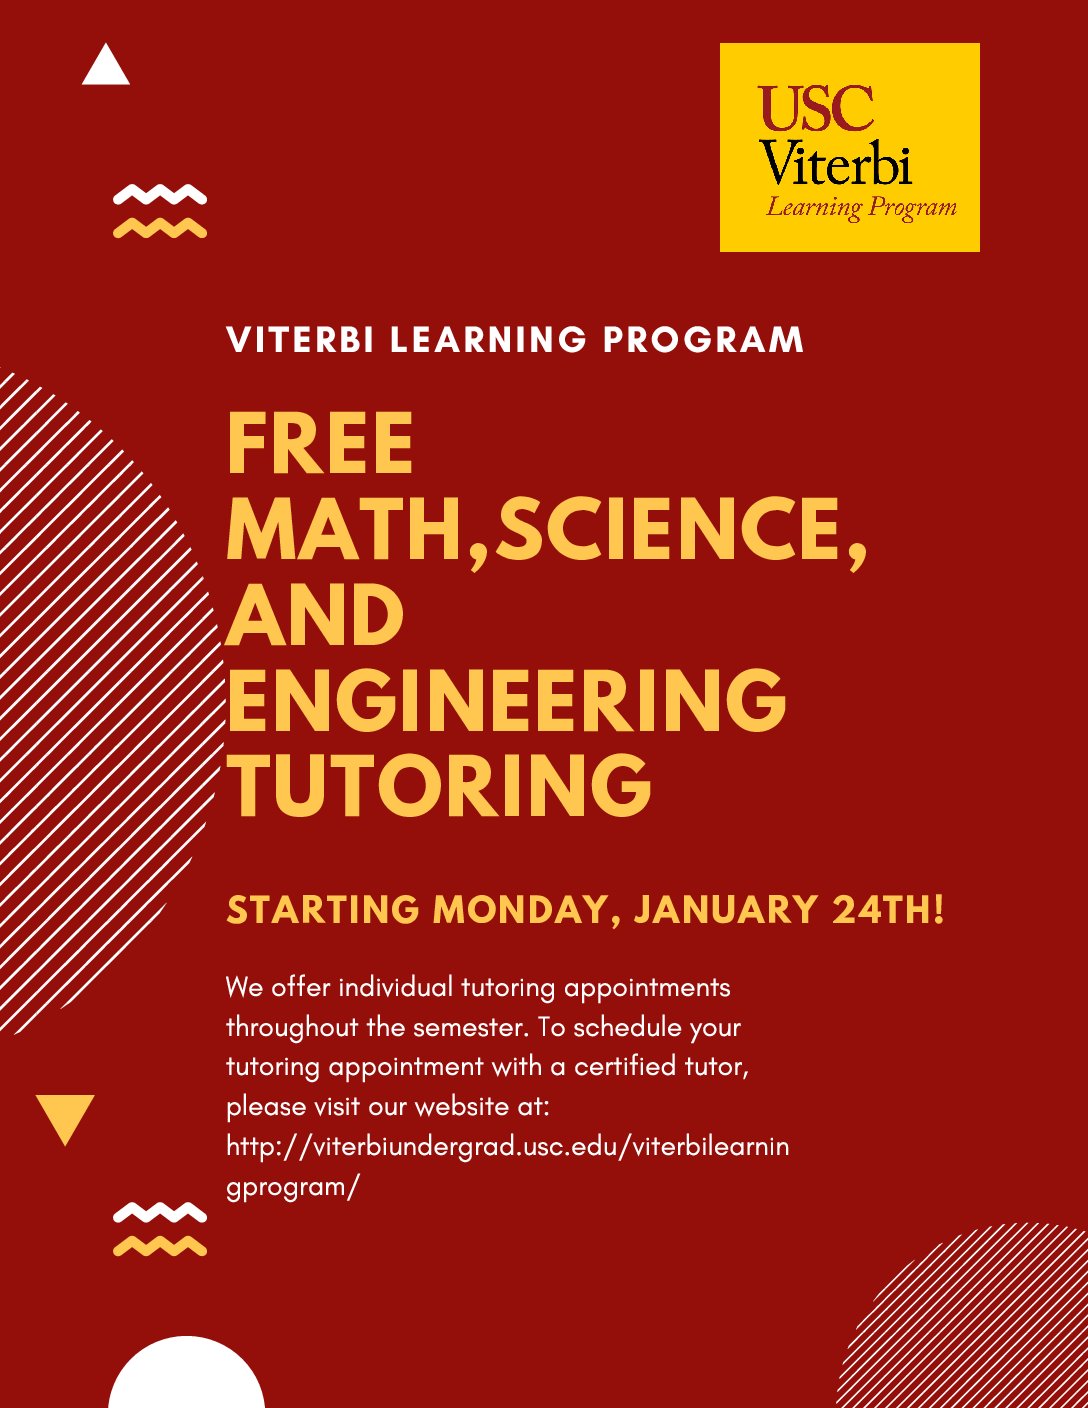 Featured image for “Viterbi Learning Program (VLP) Tutoring Opens Monday, January 24!”